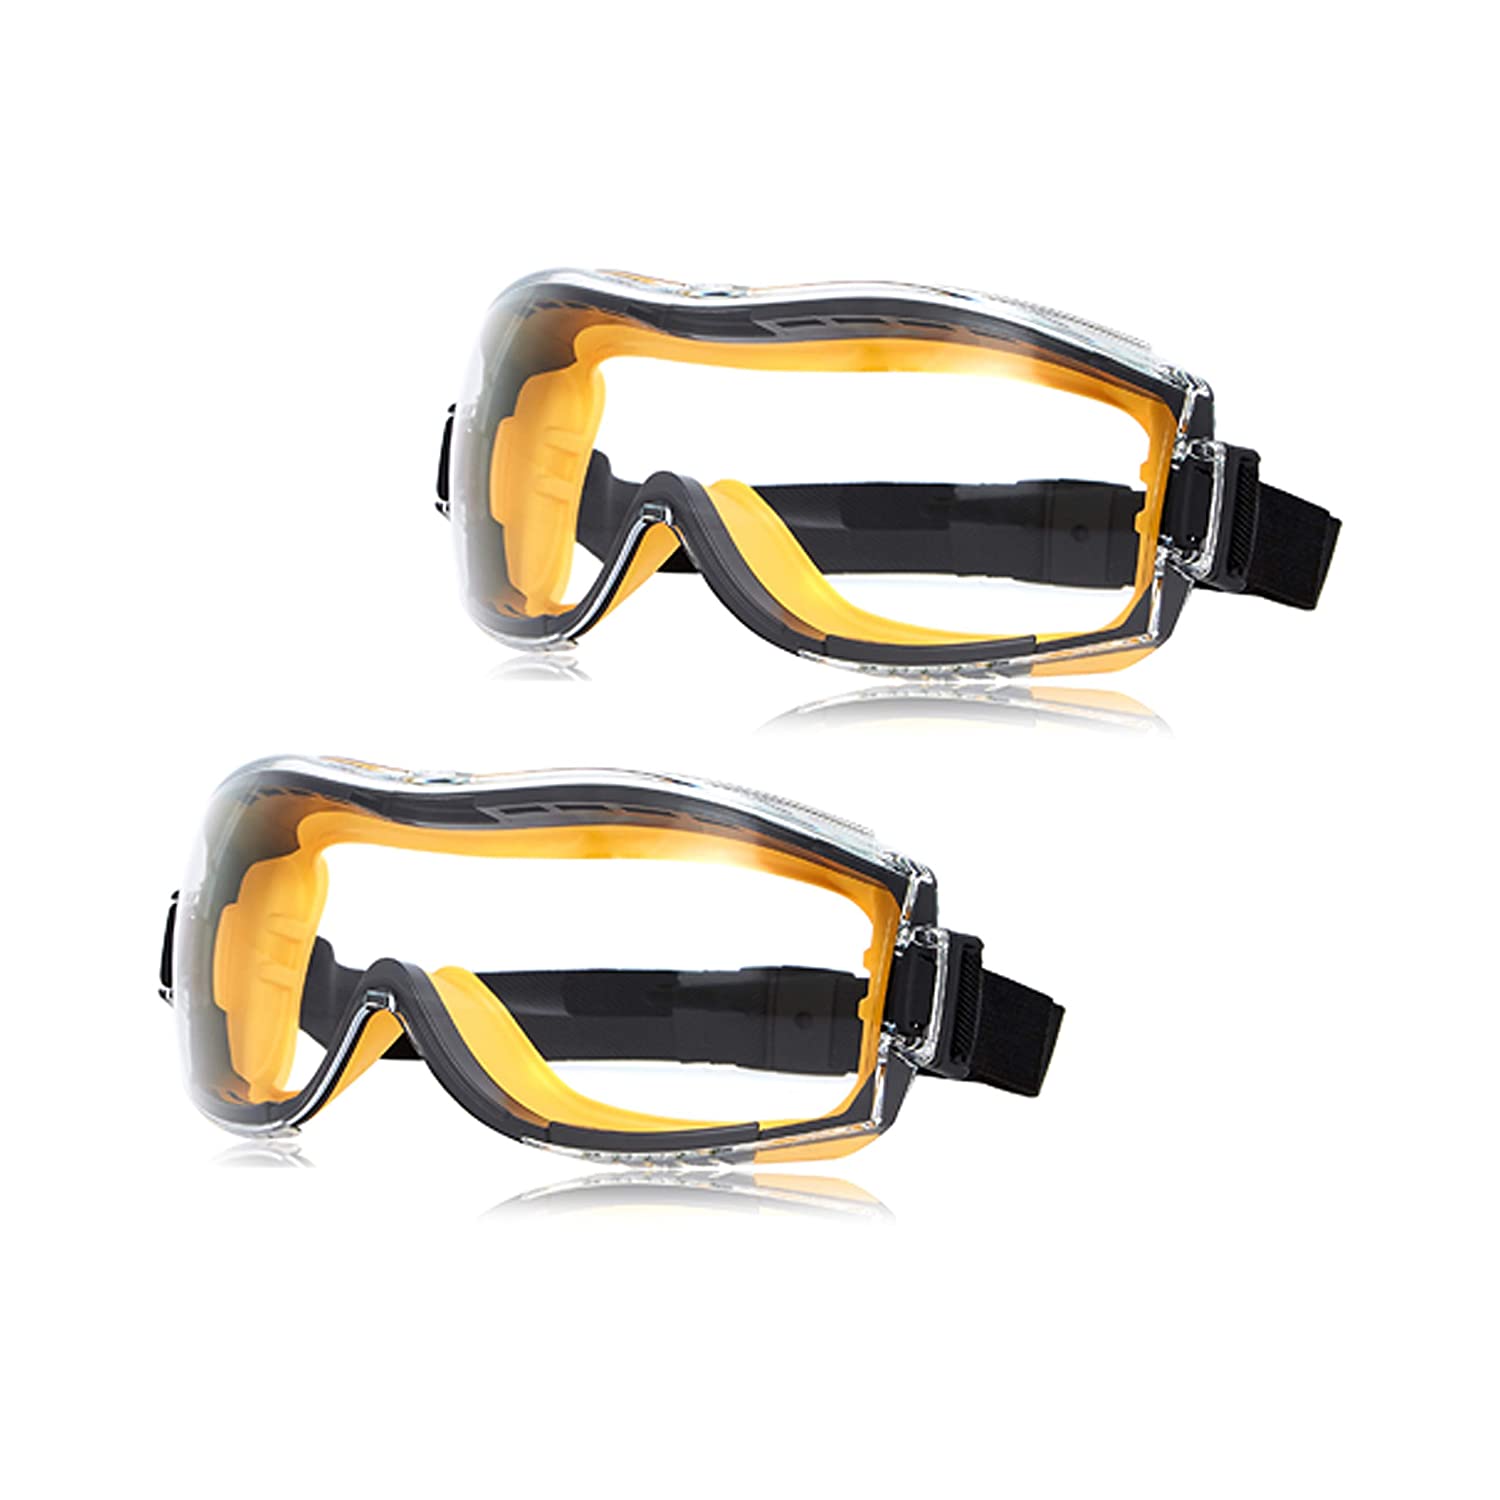 Amazon Basics Safety Goggle - Anti-Fog, Clear Lens and Elastic Headband, 2-Count